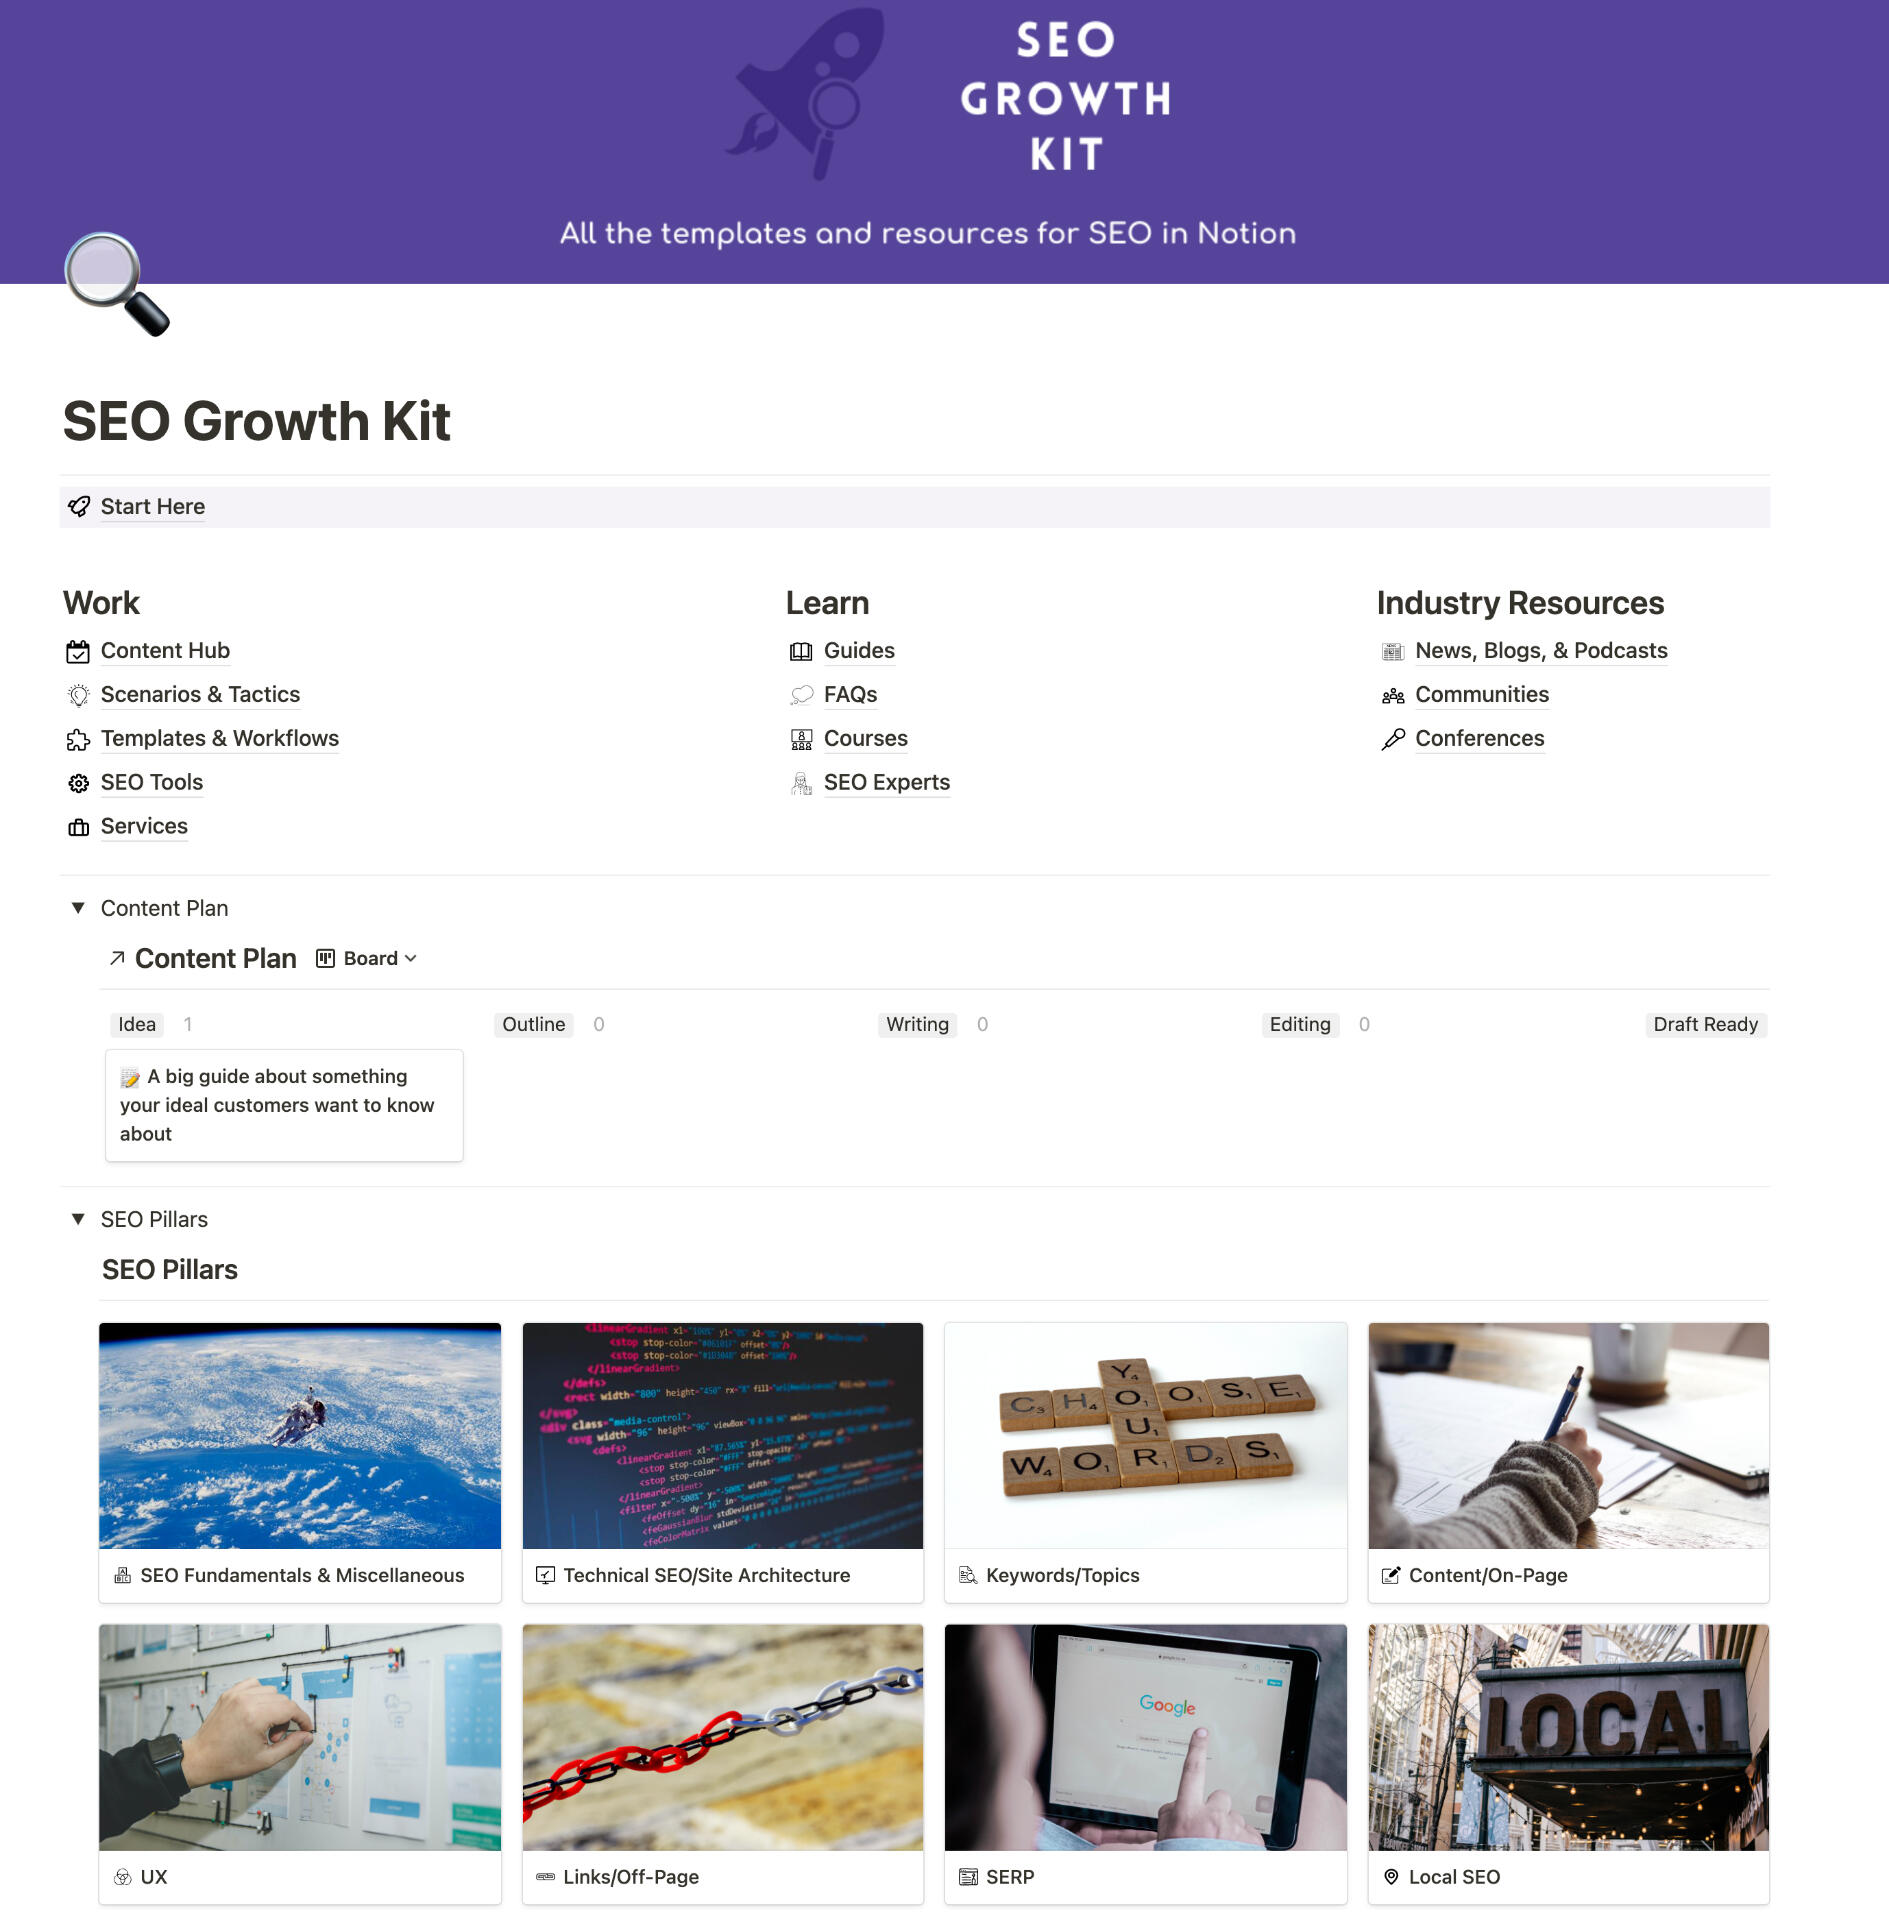 SEO Growth Kit Image